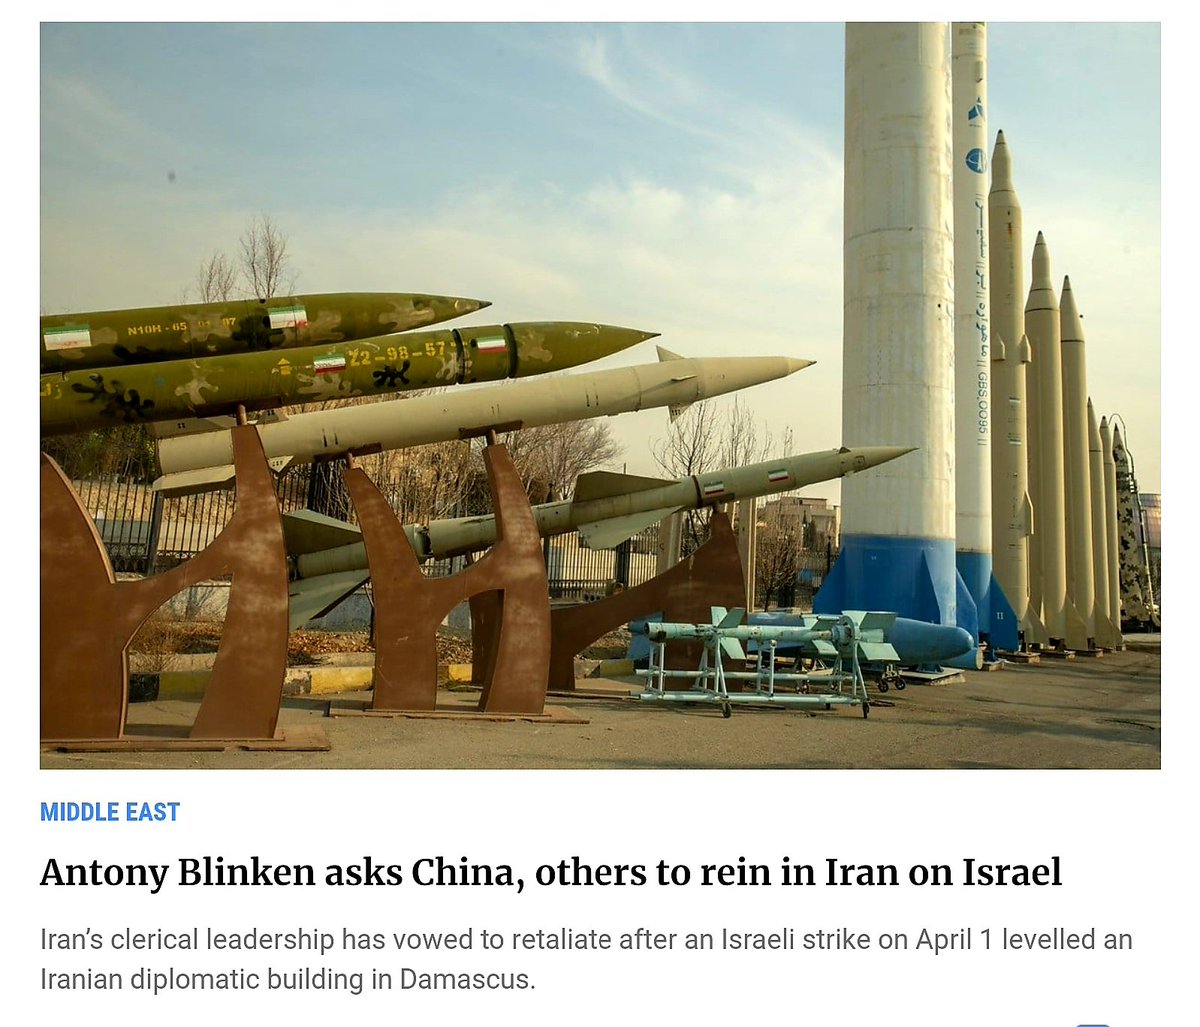 Real headline: “The world asks US, Blinken to rein in Israel over Gaza.”